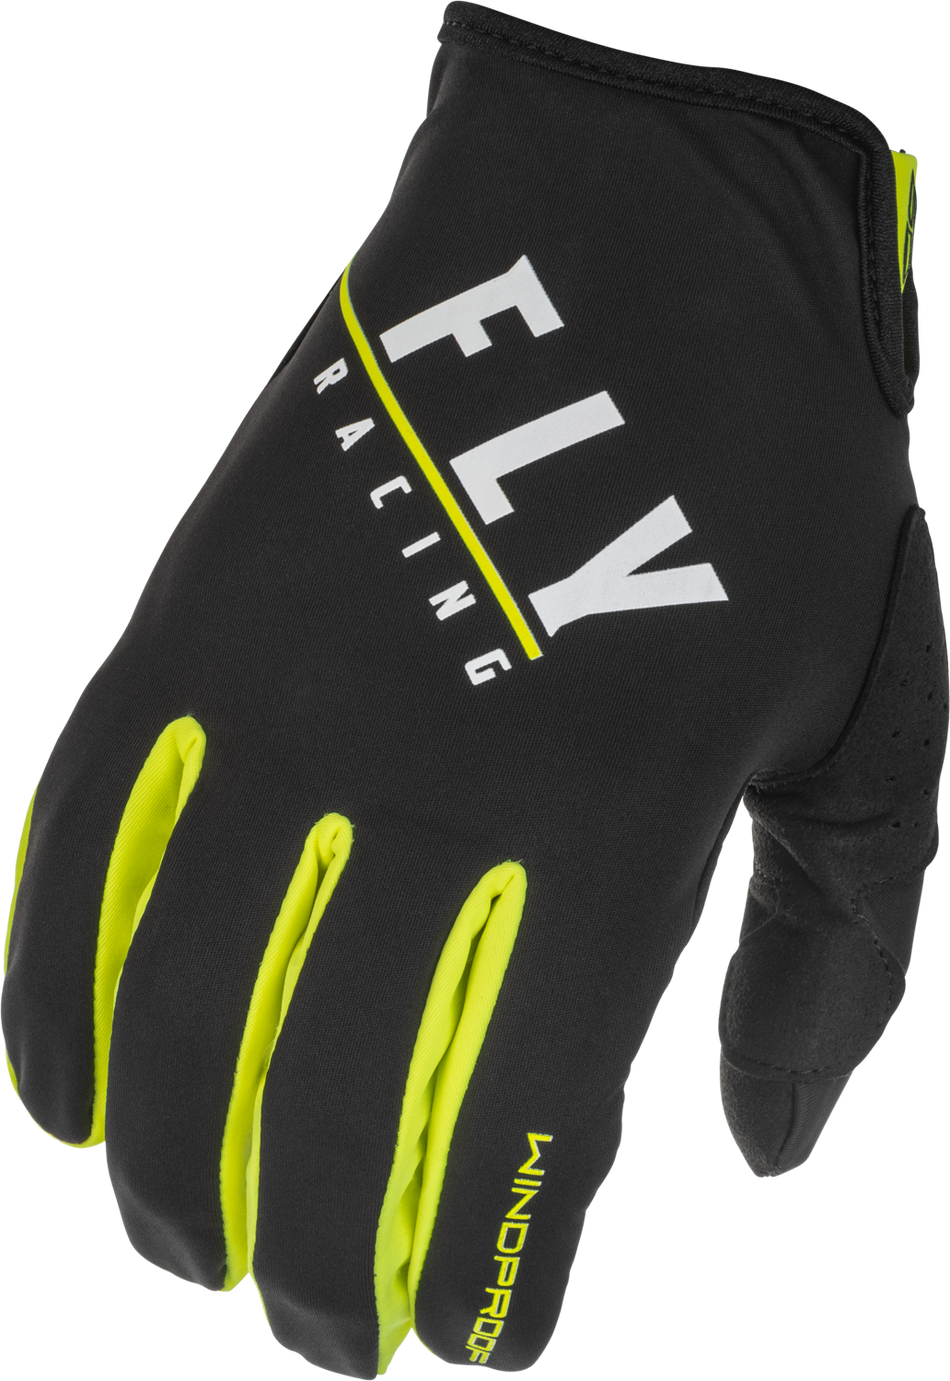 FLY RACING Youth Windproof Gloves Black/Hi-Vis Sz 06 371-14206